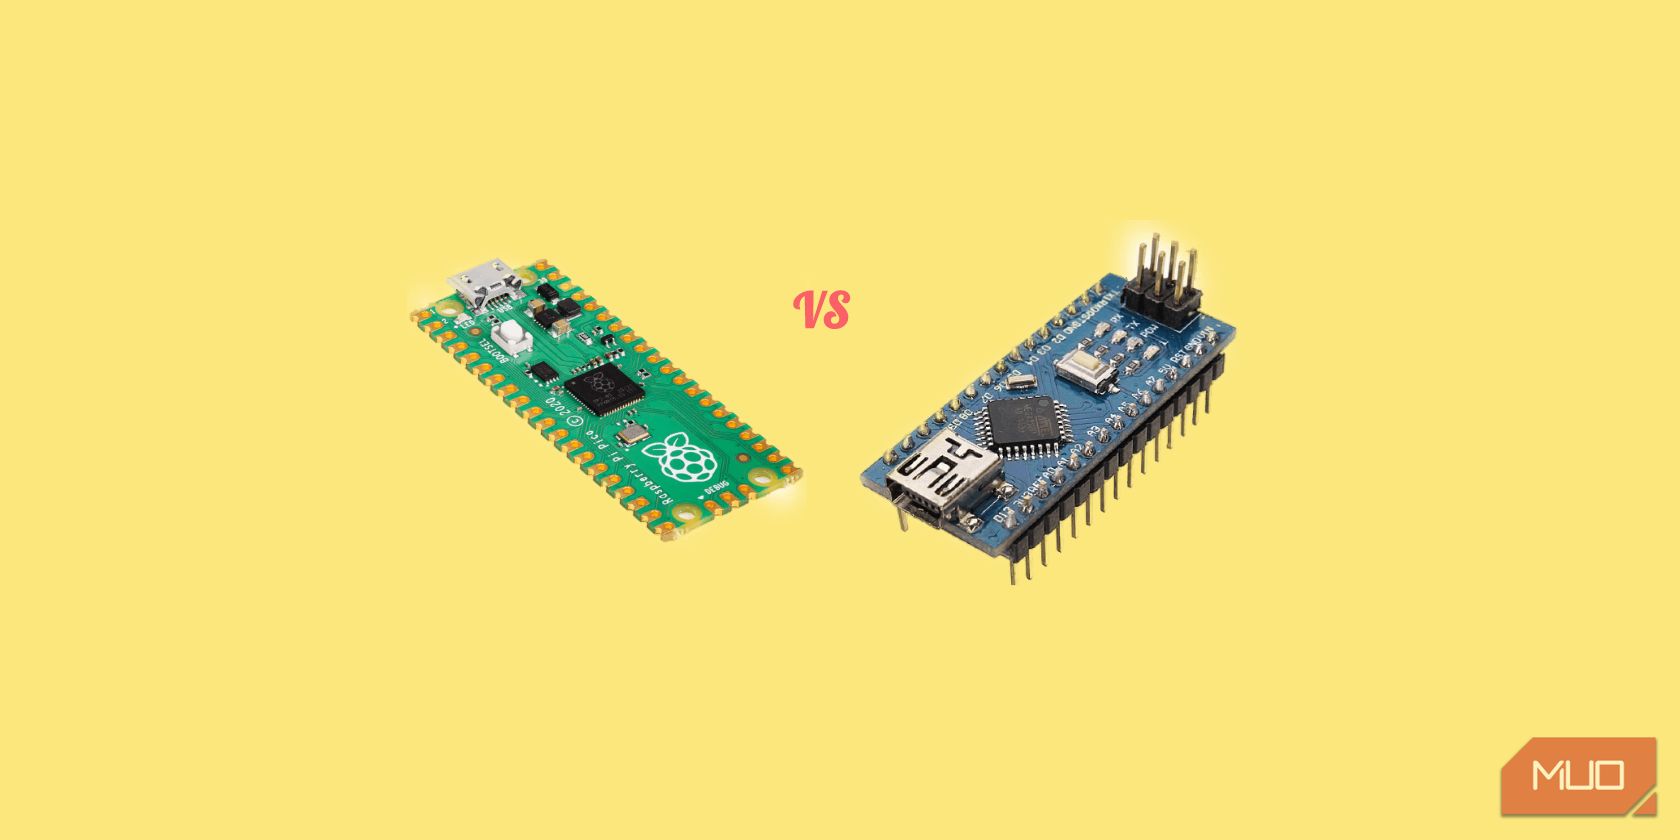 Raspberry Pi Pico and Arduino Nano boards on a yellow background